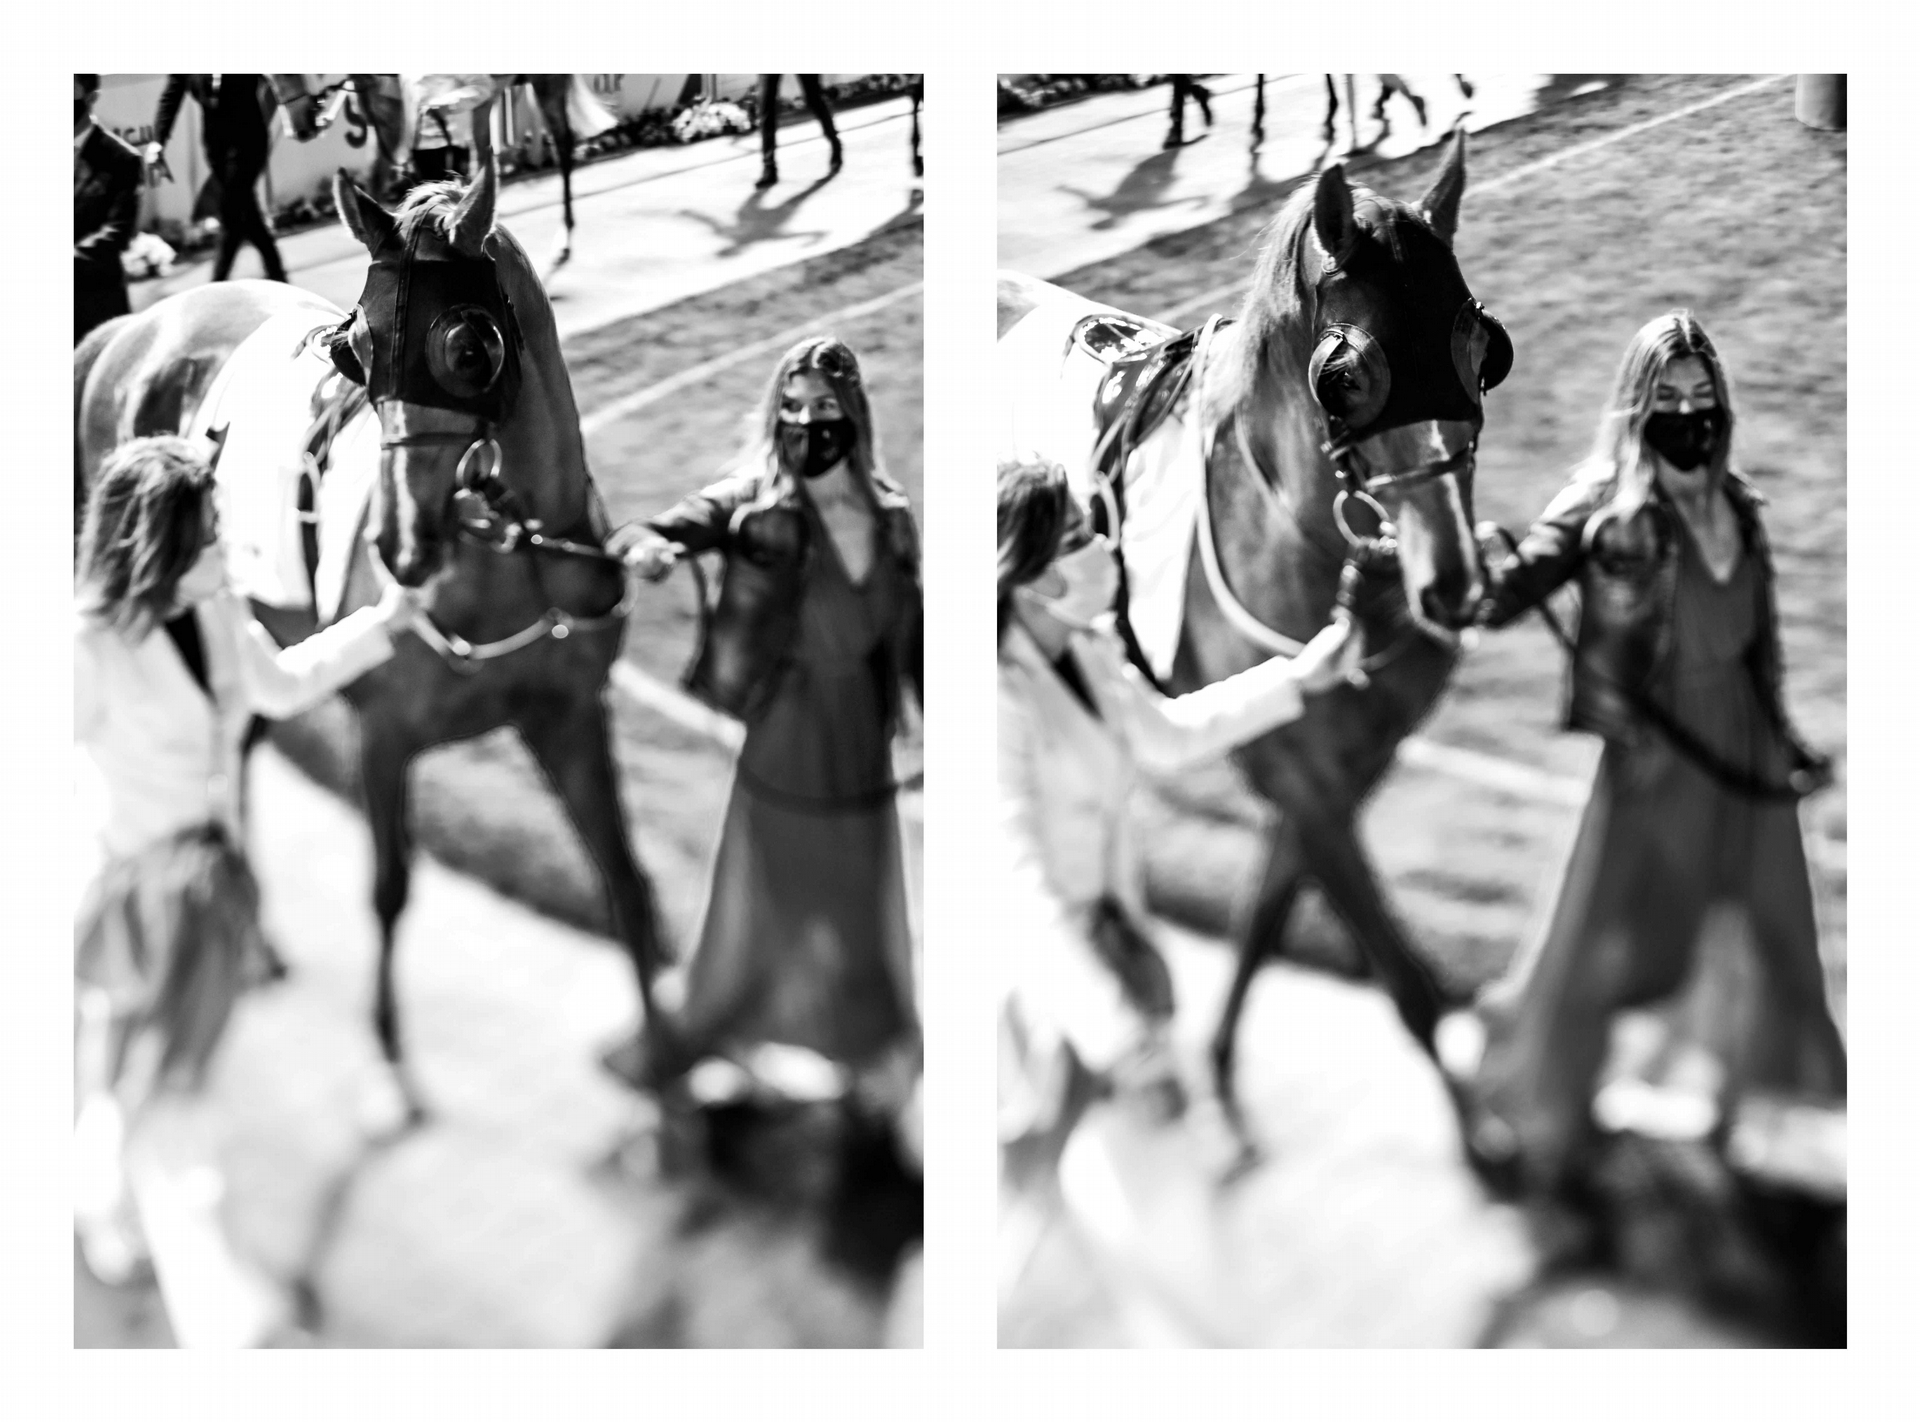 <b>2021 年沙烏地杯 - </b>比賽開始前，優雅的馬伕們在展示圈內牽著一批純種阿拉伯馬。